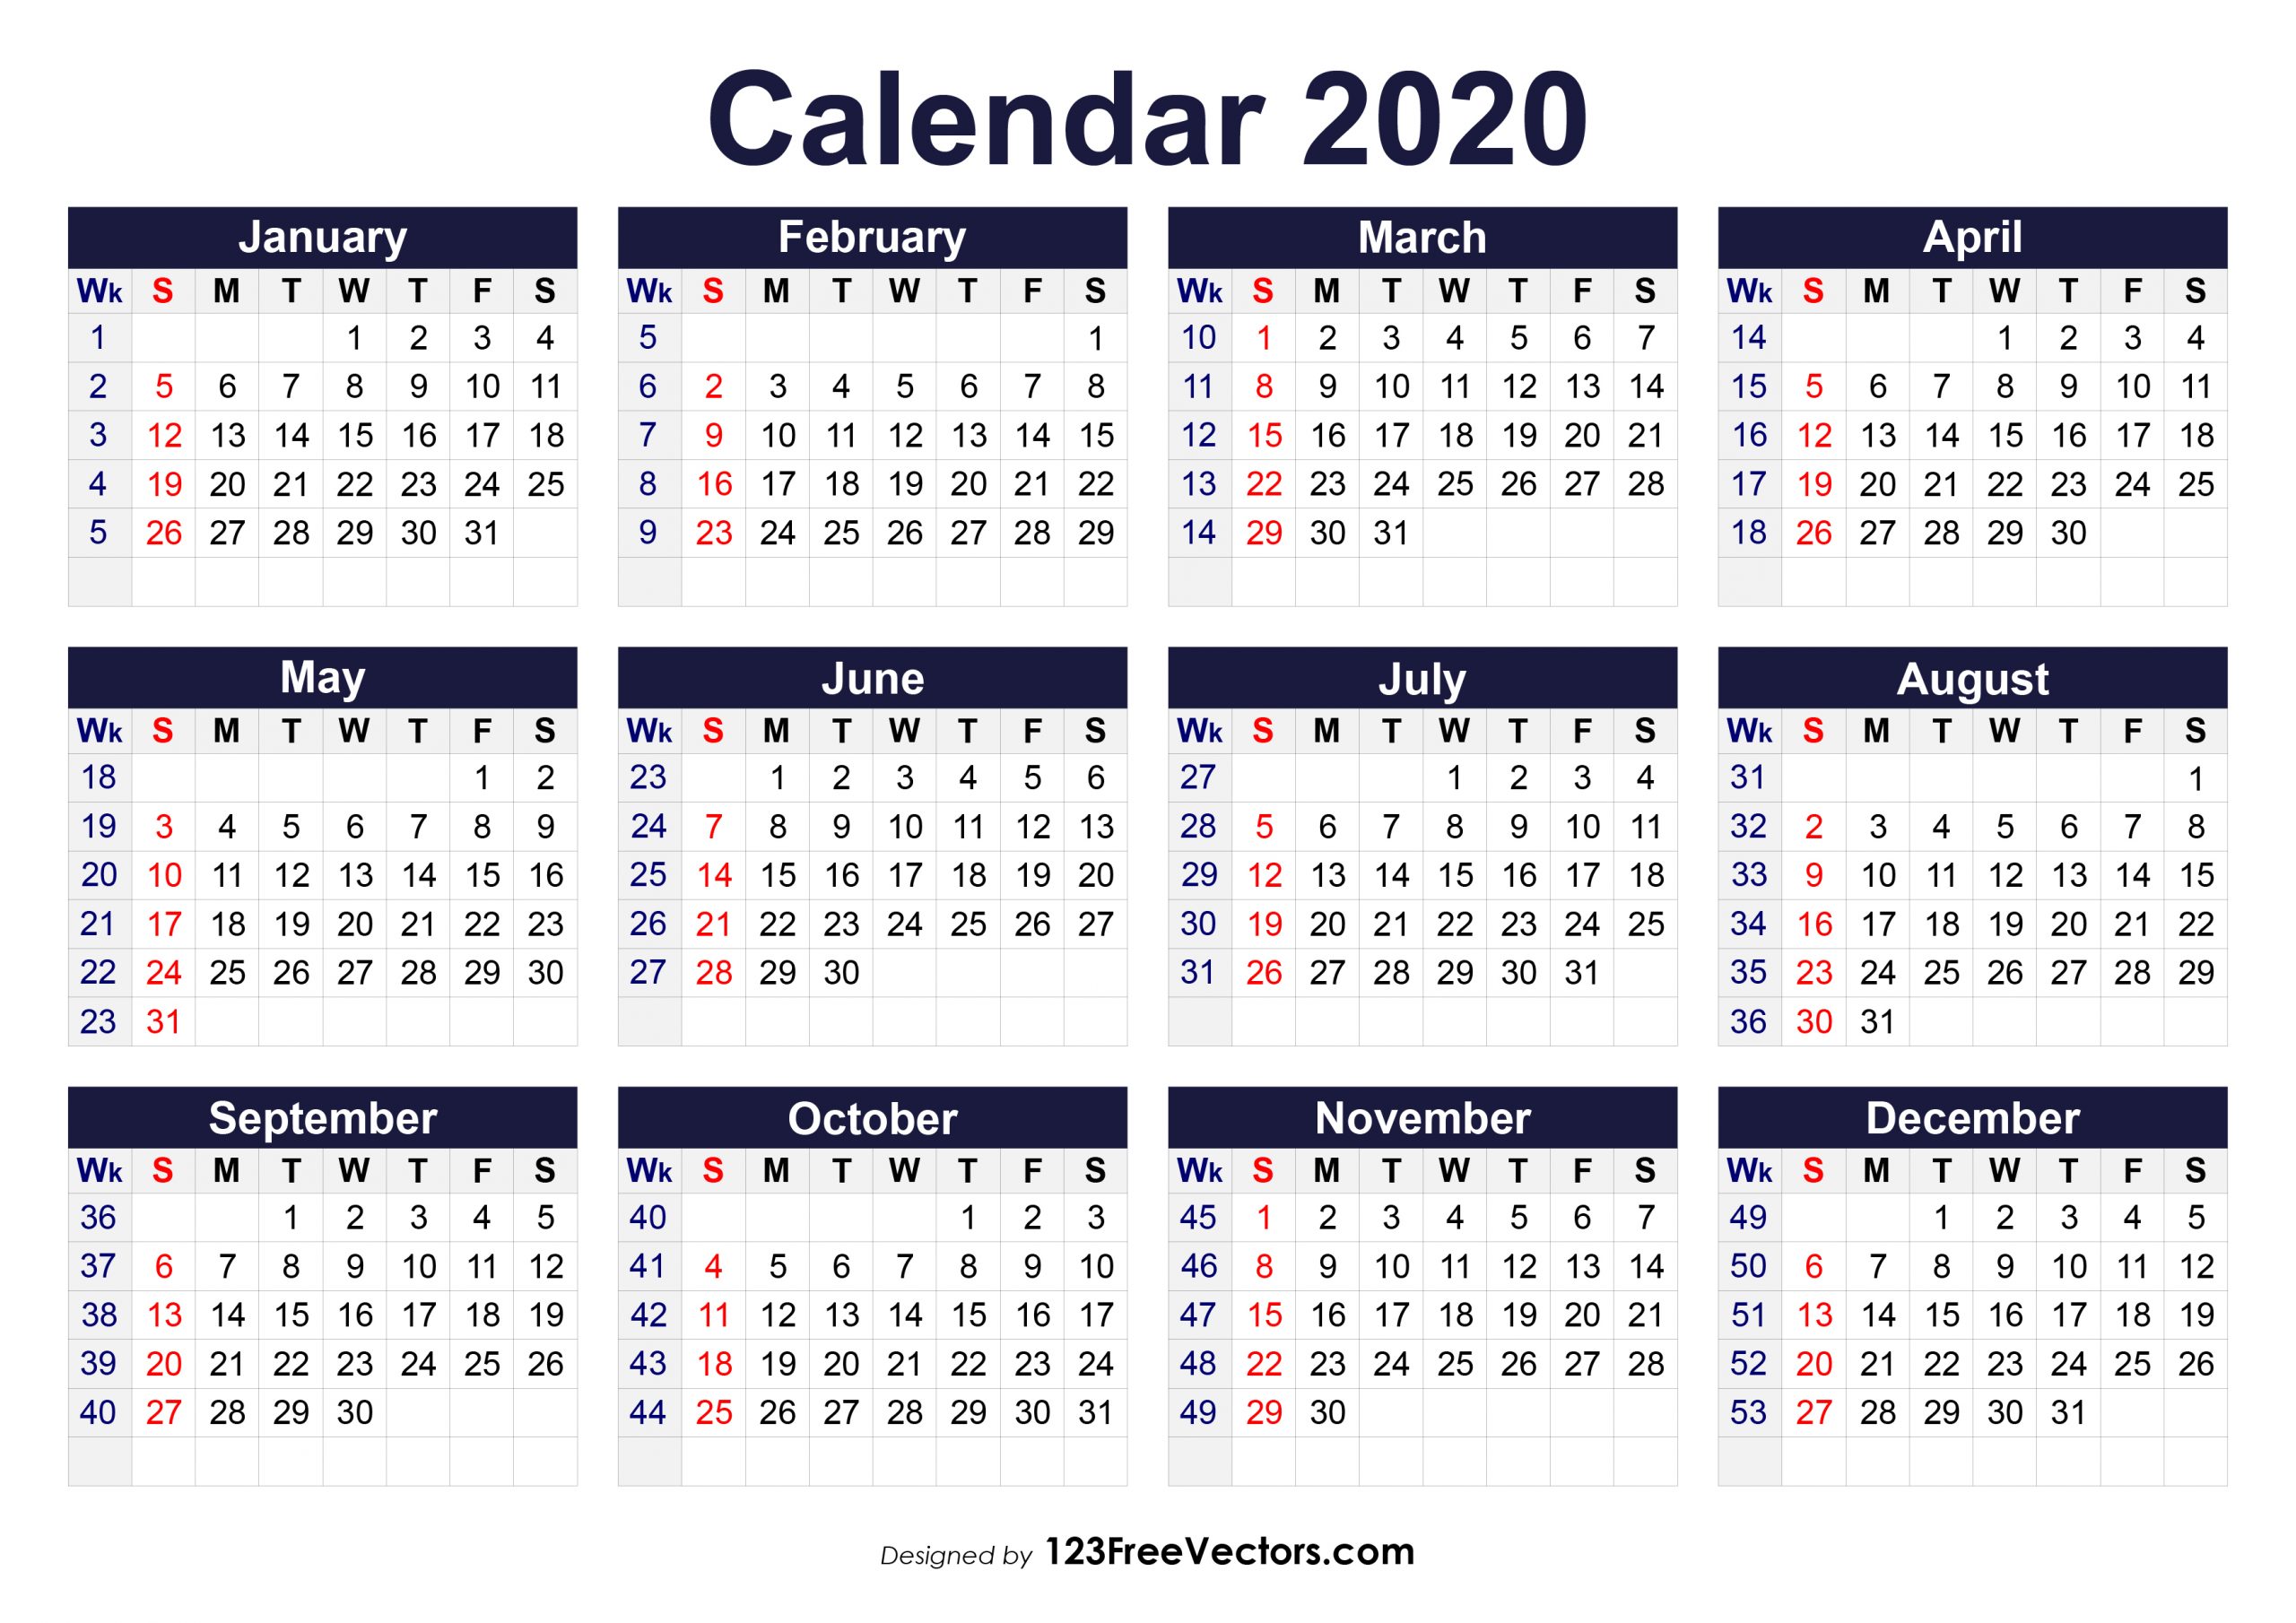 Get 2020 Monthly Calinder With Week Numbers